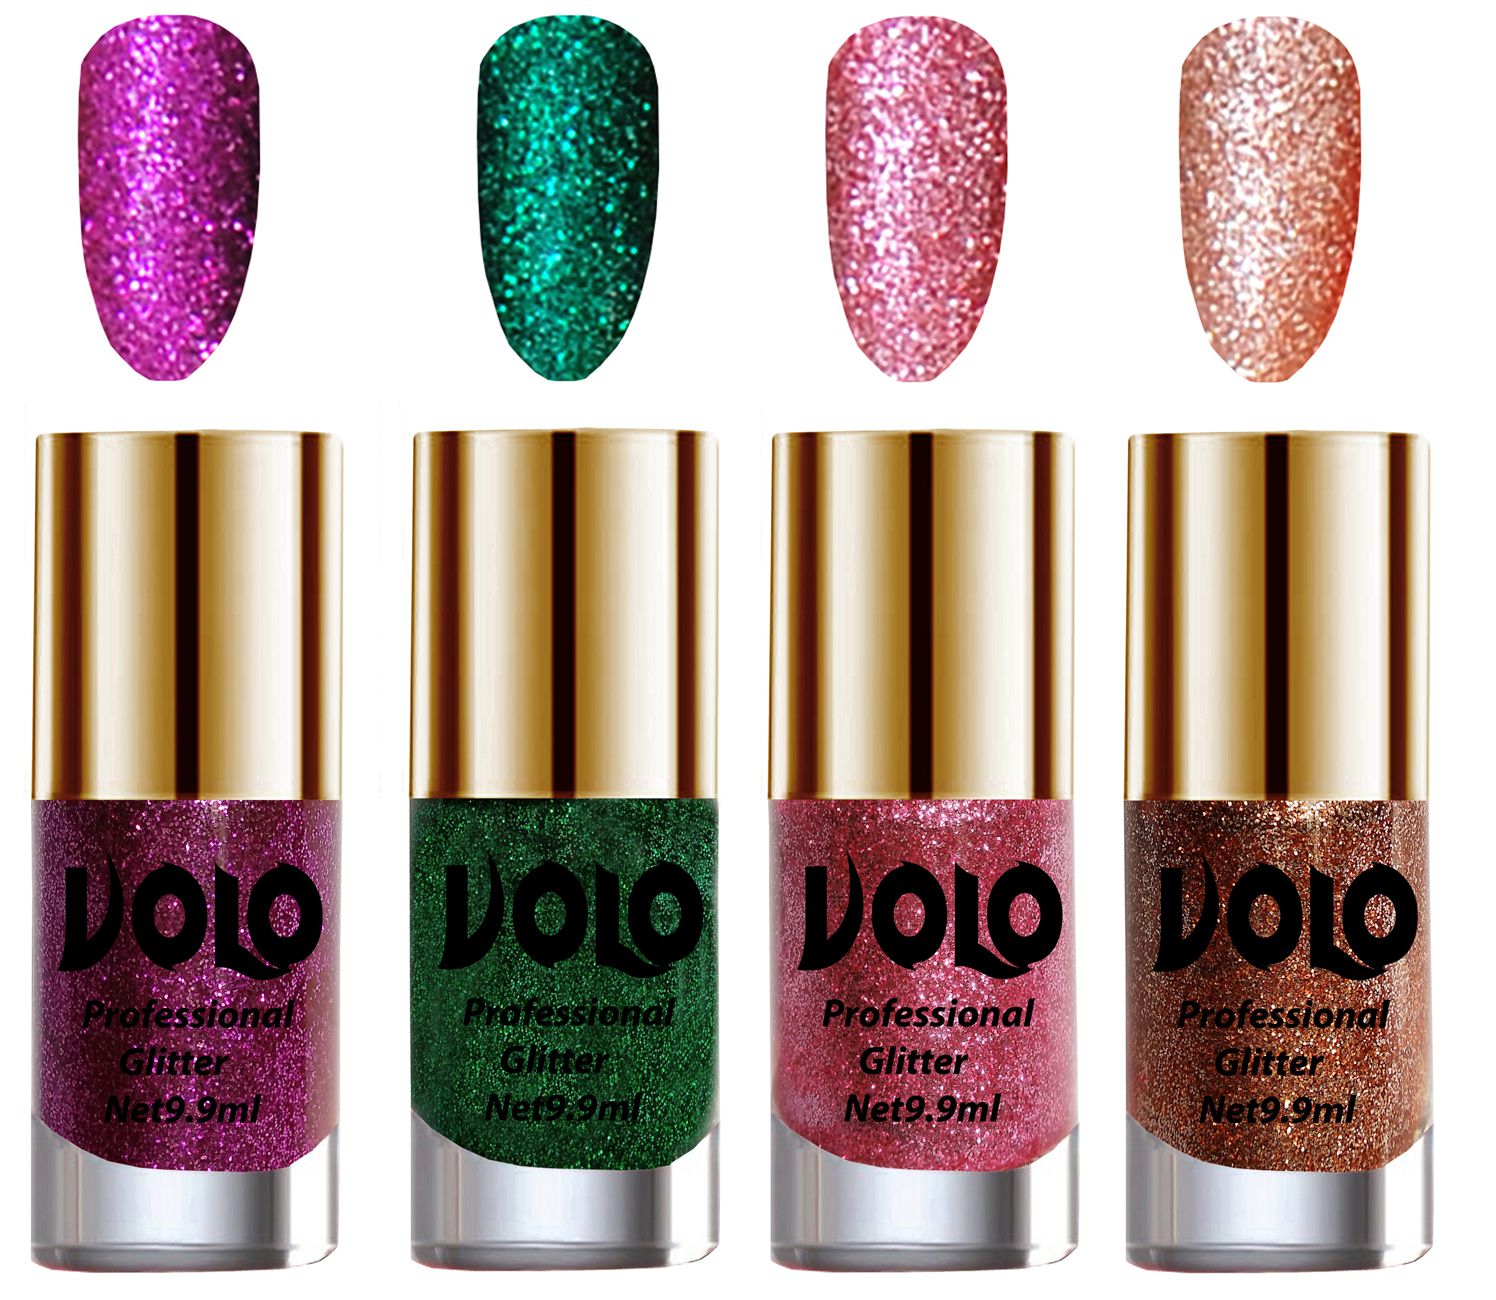     			VOLO Professionally Used Glitter Shine Nail Polish Purple,Green,Pink Pink Pack of 4 39 mL